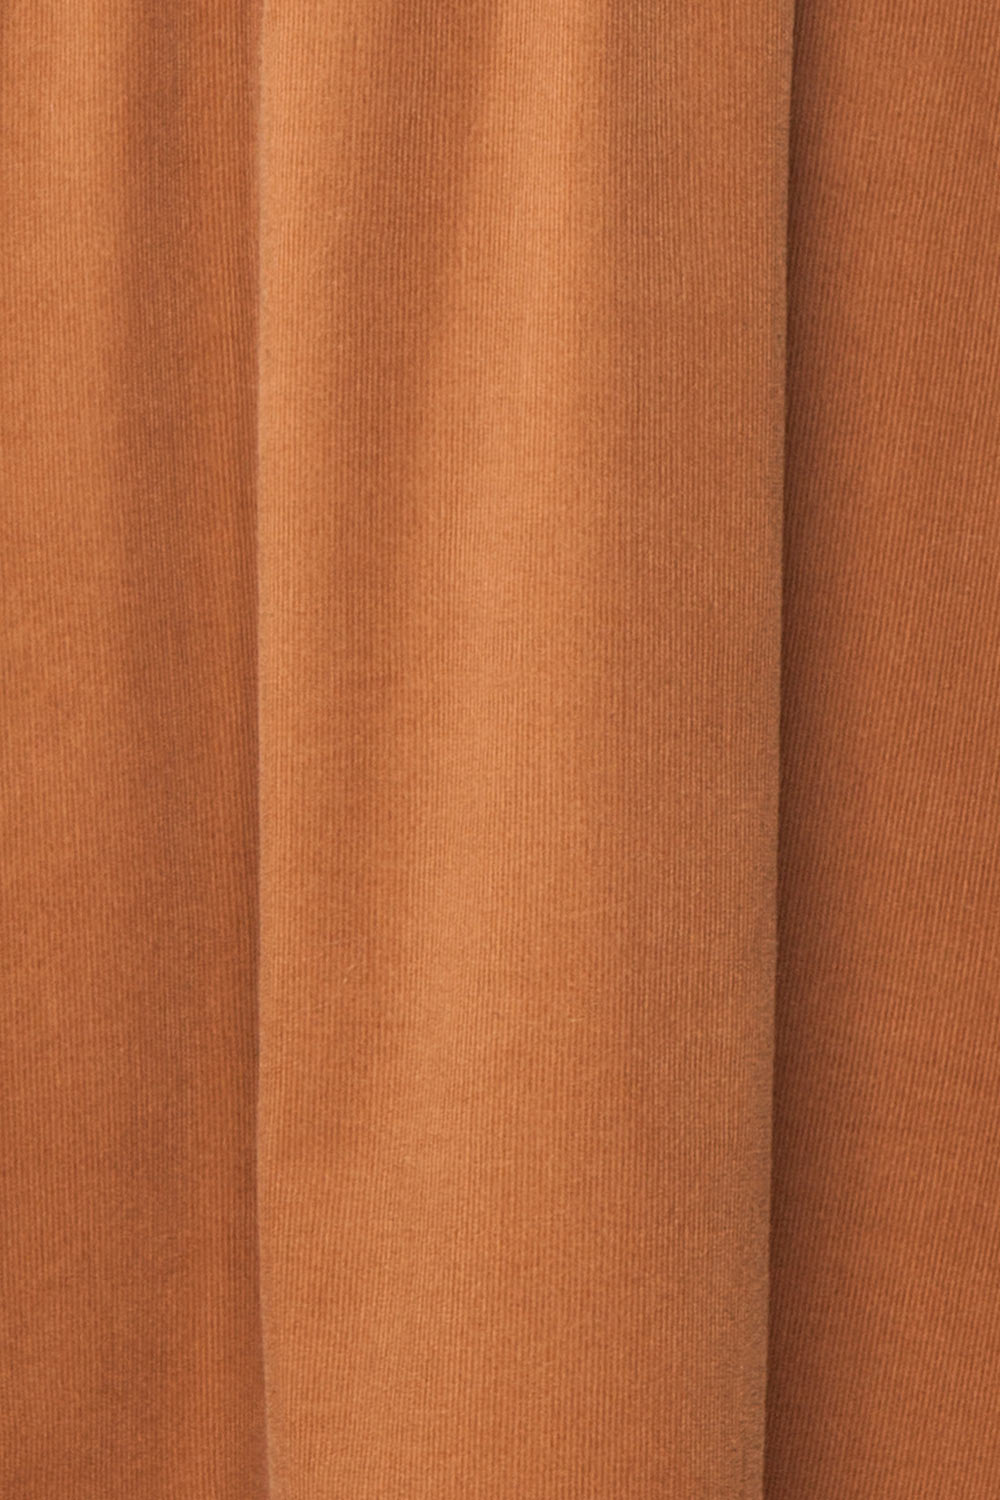 Adelais Brown Corduroy A-Line Short Dress | Boutique 1861 fabric 